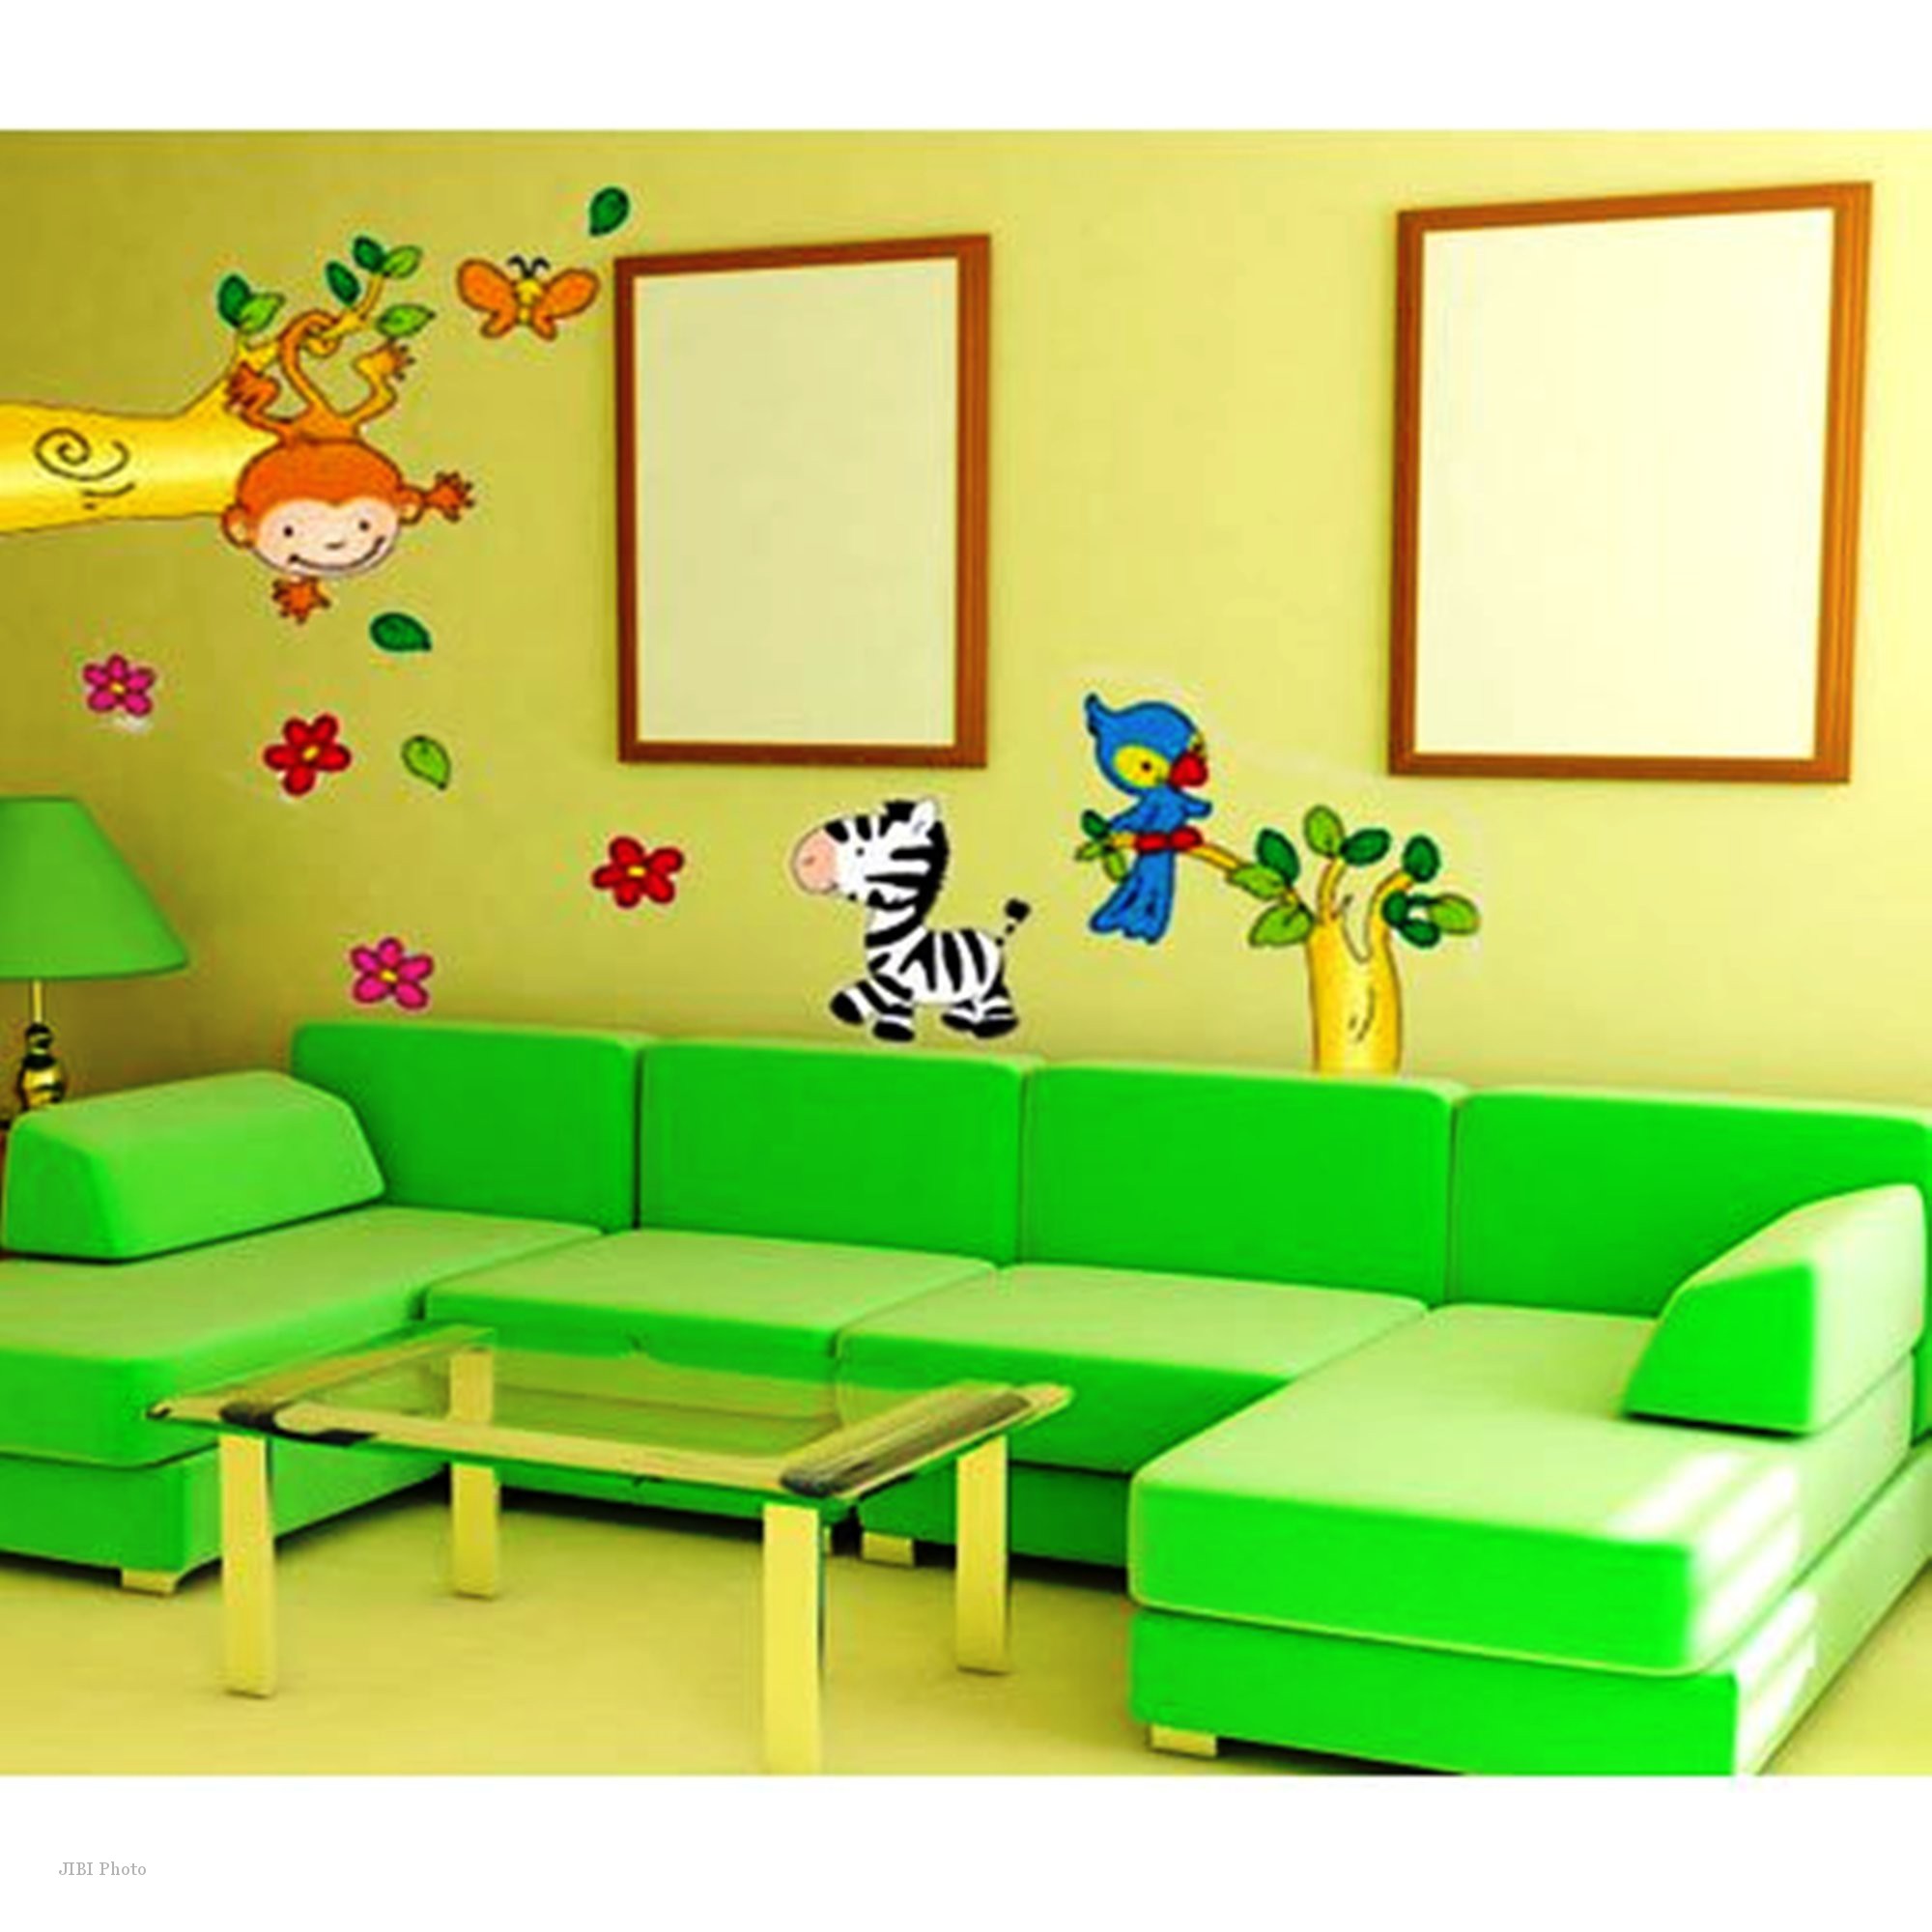 contoh gambar壁紙,緑,家具,ルーム,黄,テーブル